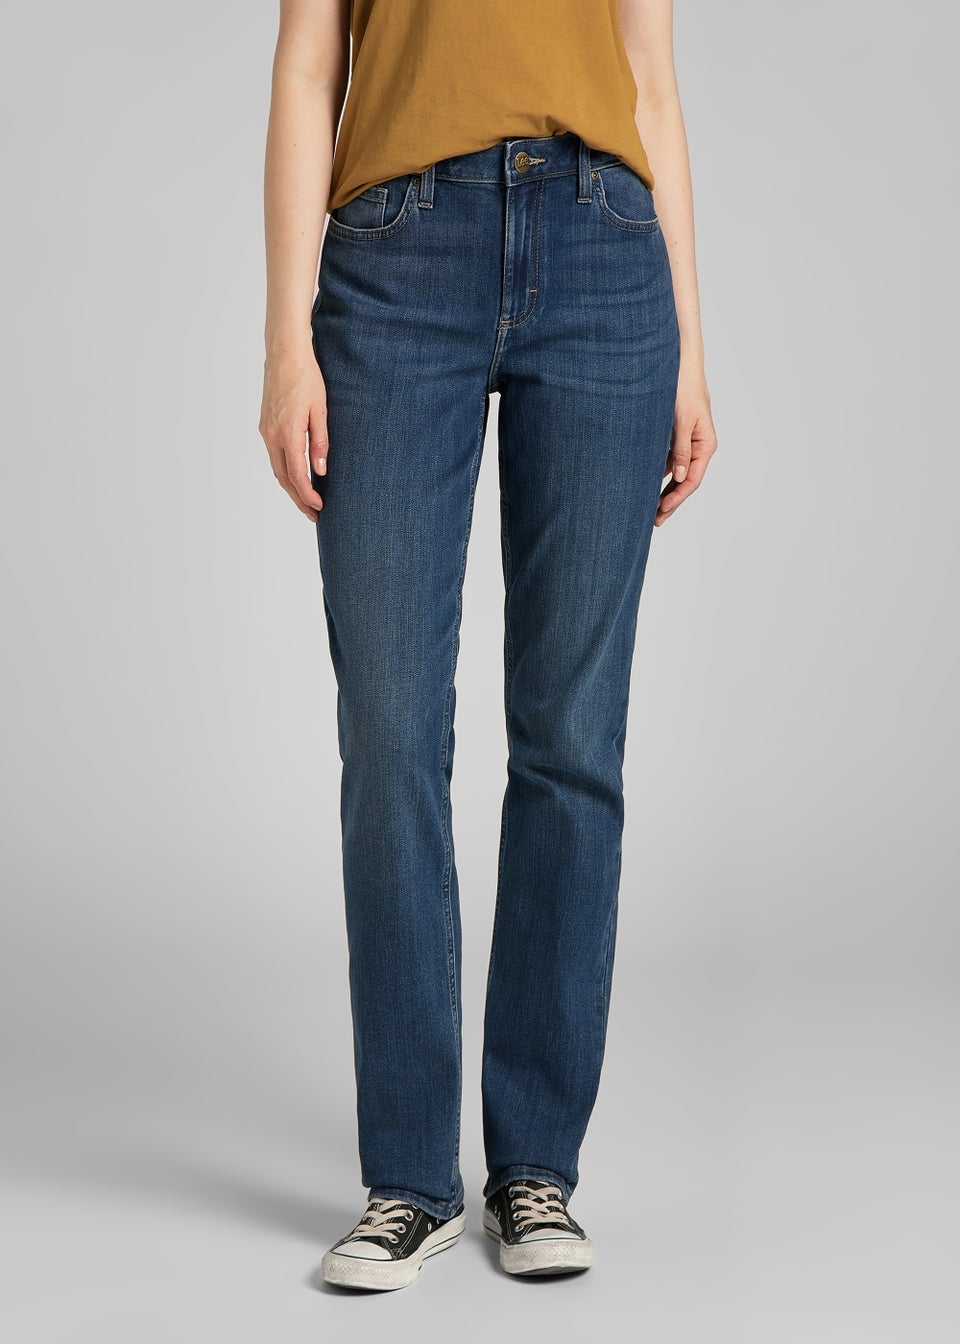 DION LEE Cutout tie-dyed wide-leg jeans | NET-A-PORTER